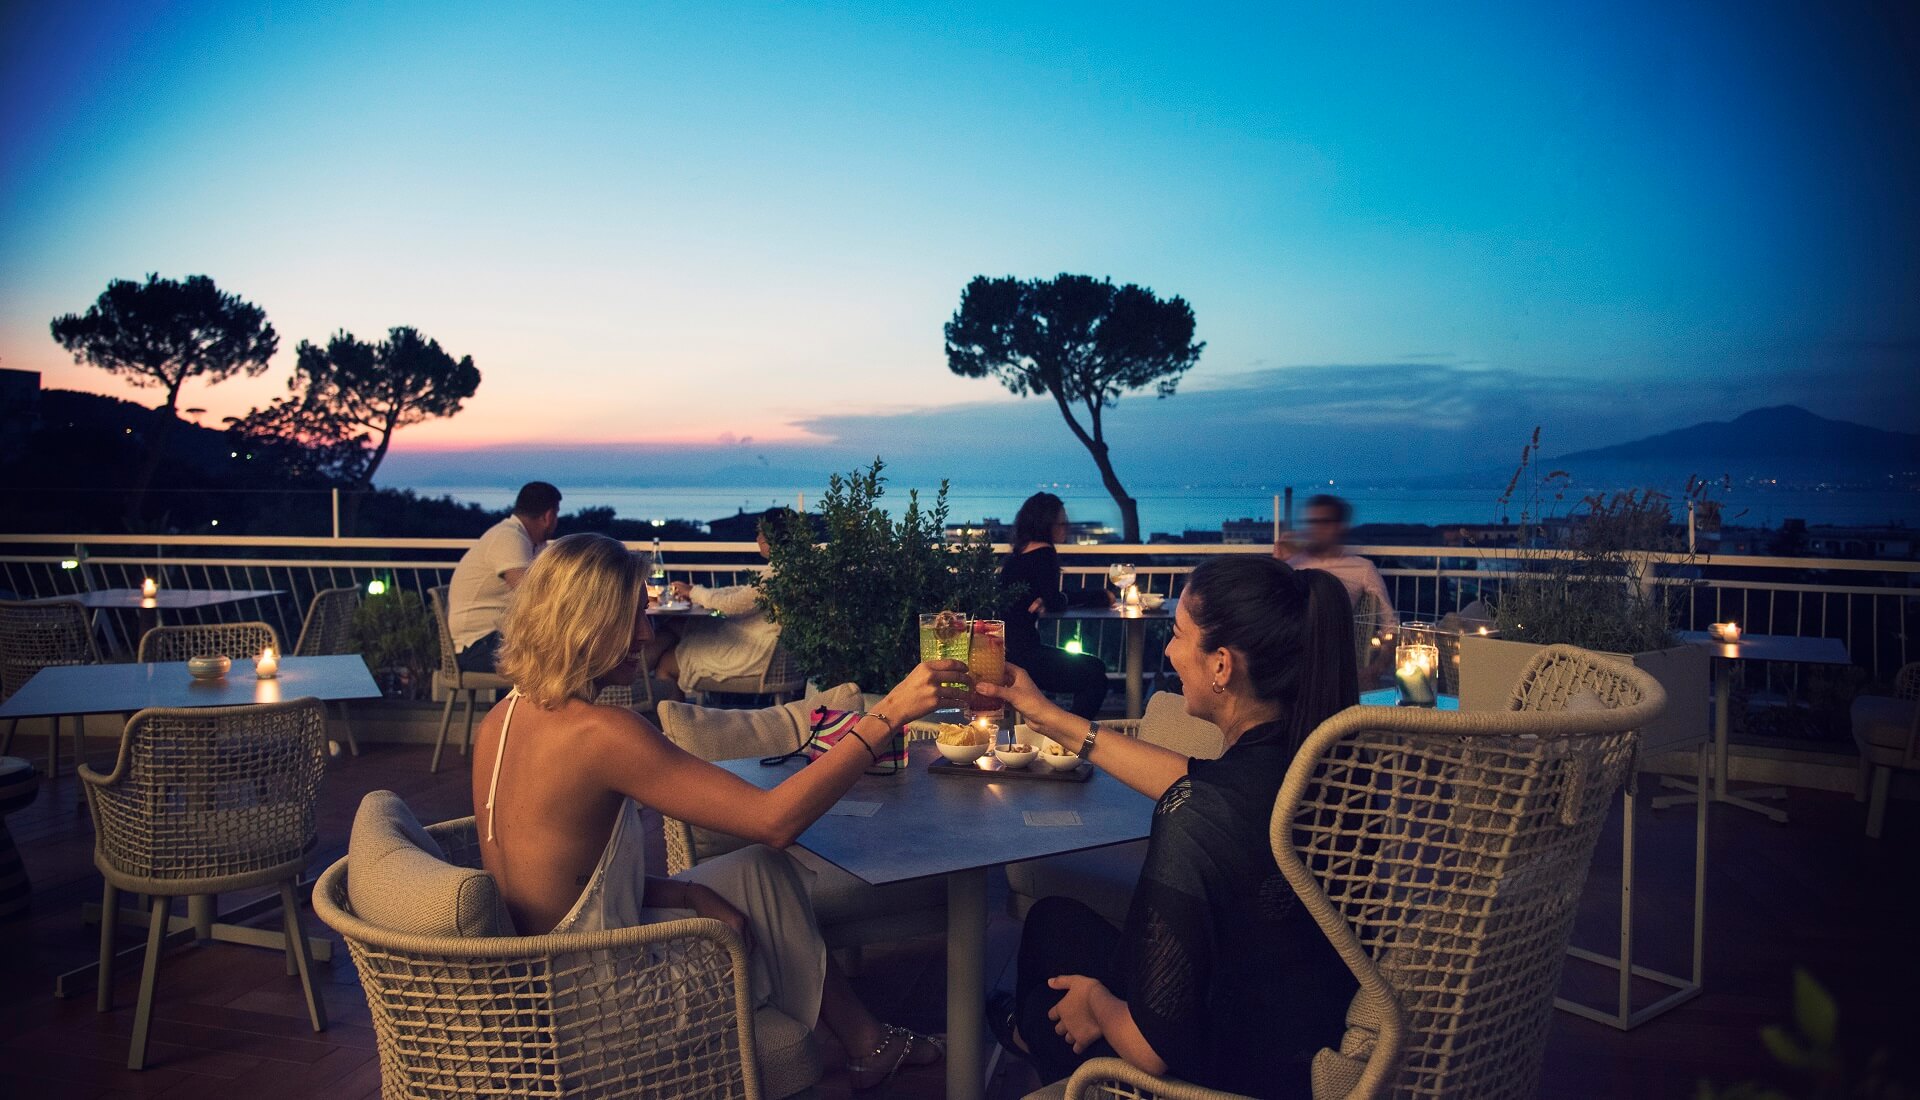 Making Moments Hilton Sorrento - Sunset of Dreams